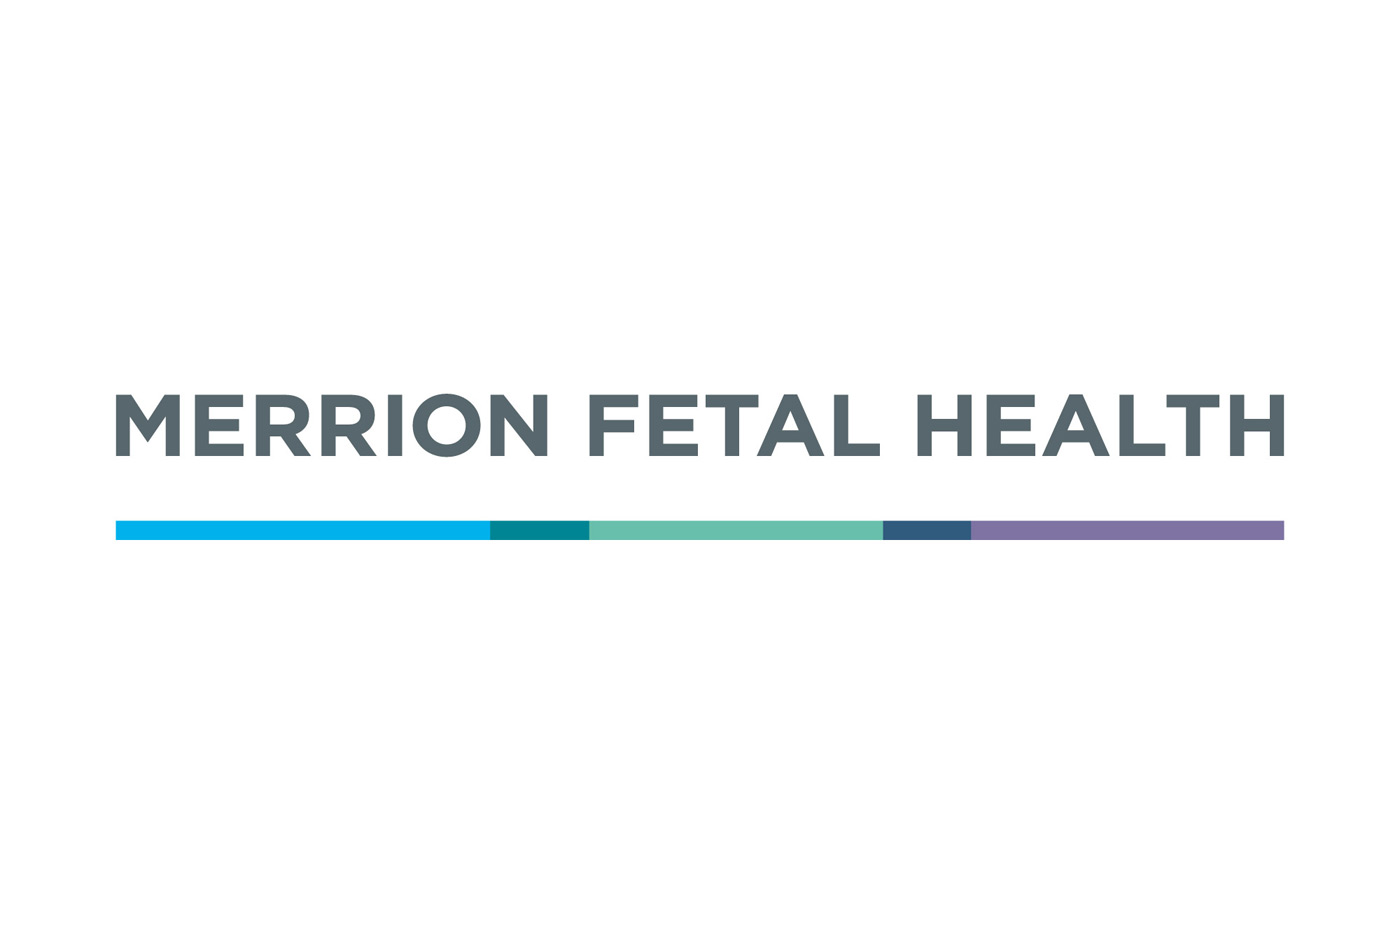 Merrion Fetal Health identity